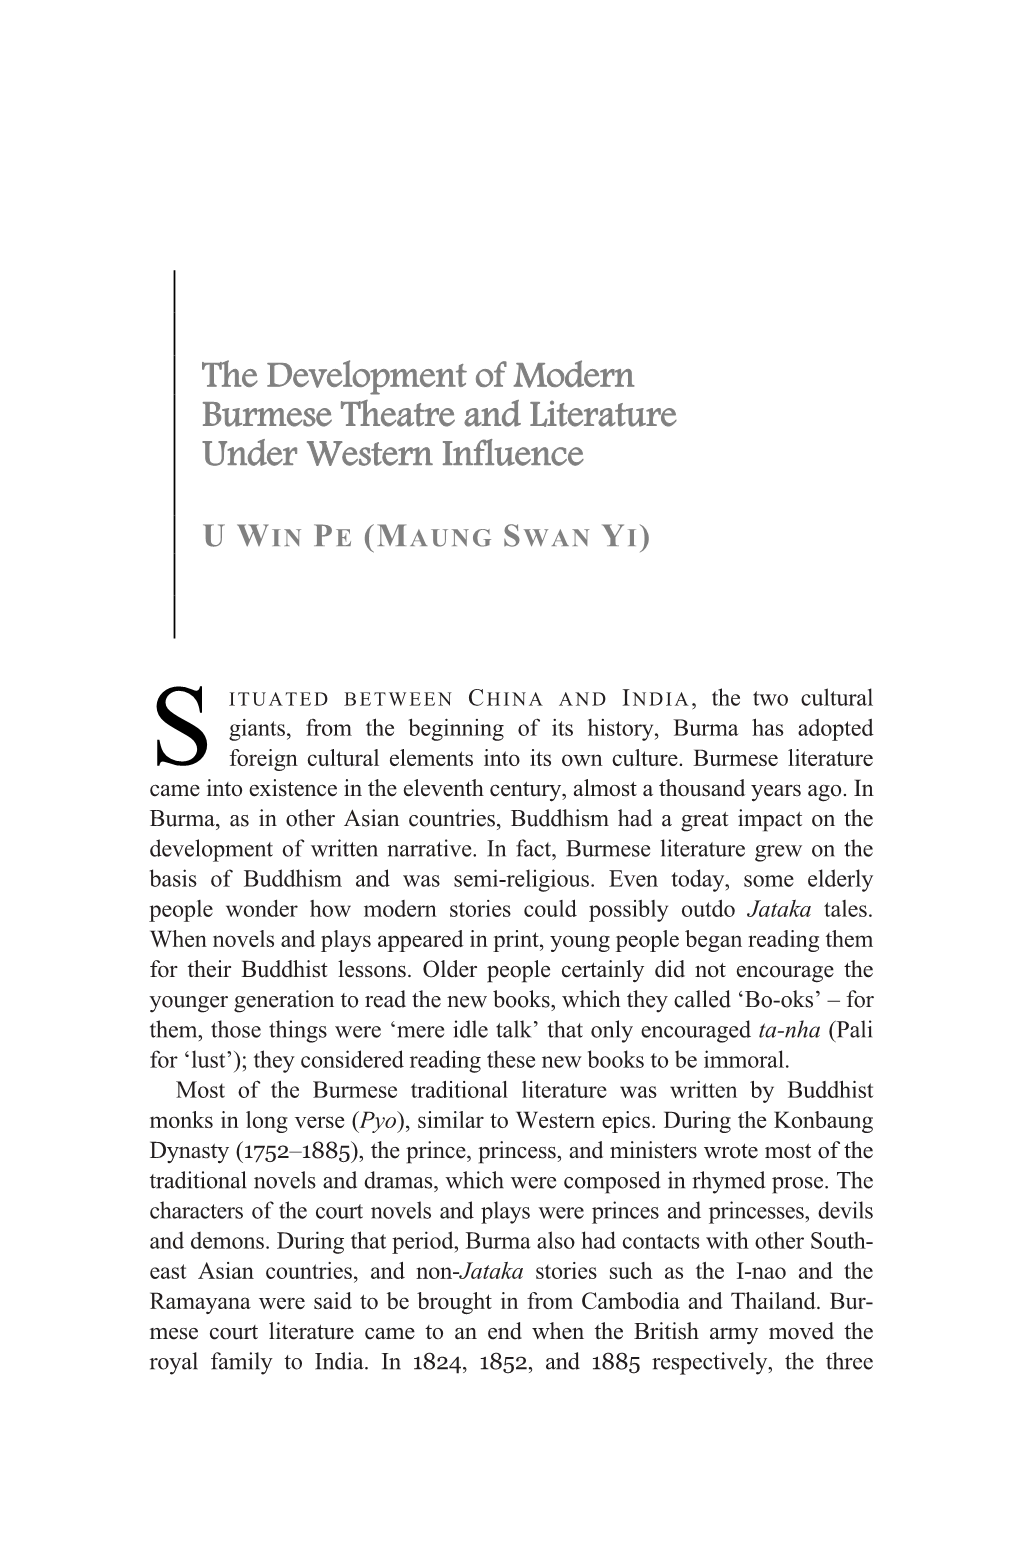 The Development of Modern Burmese Theatre and Literature Under Western Influence